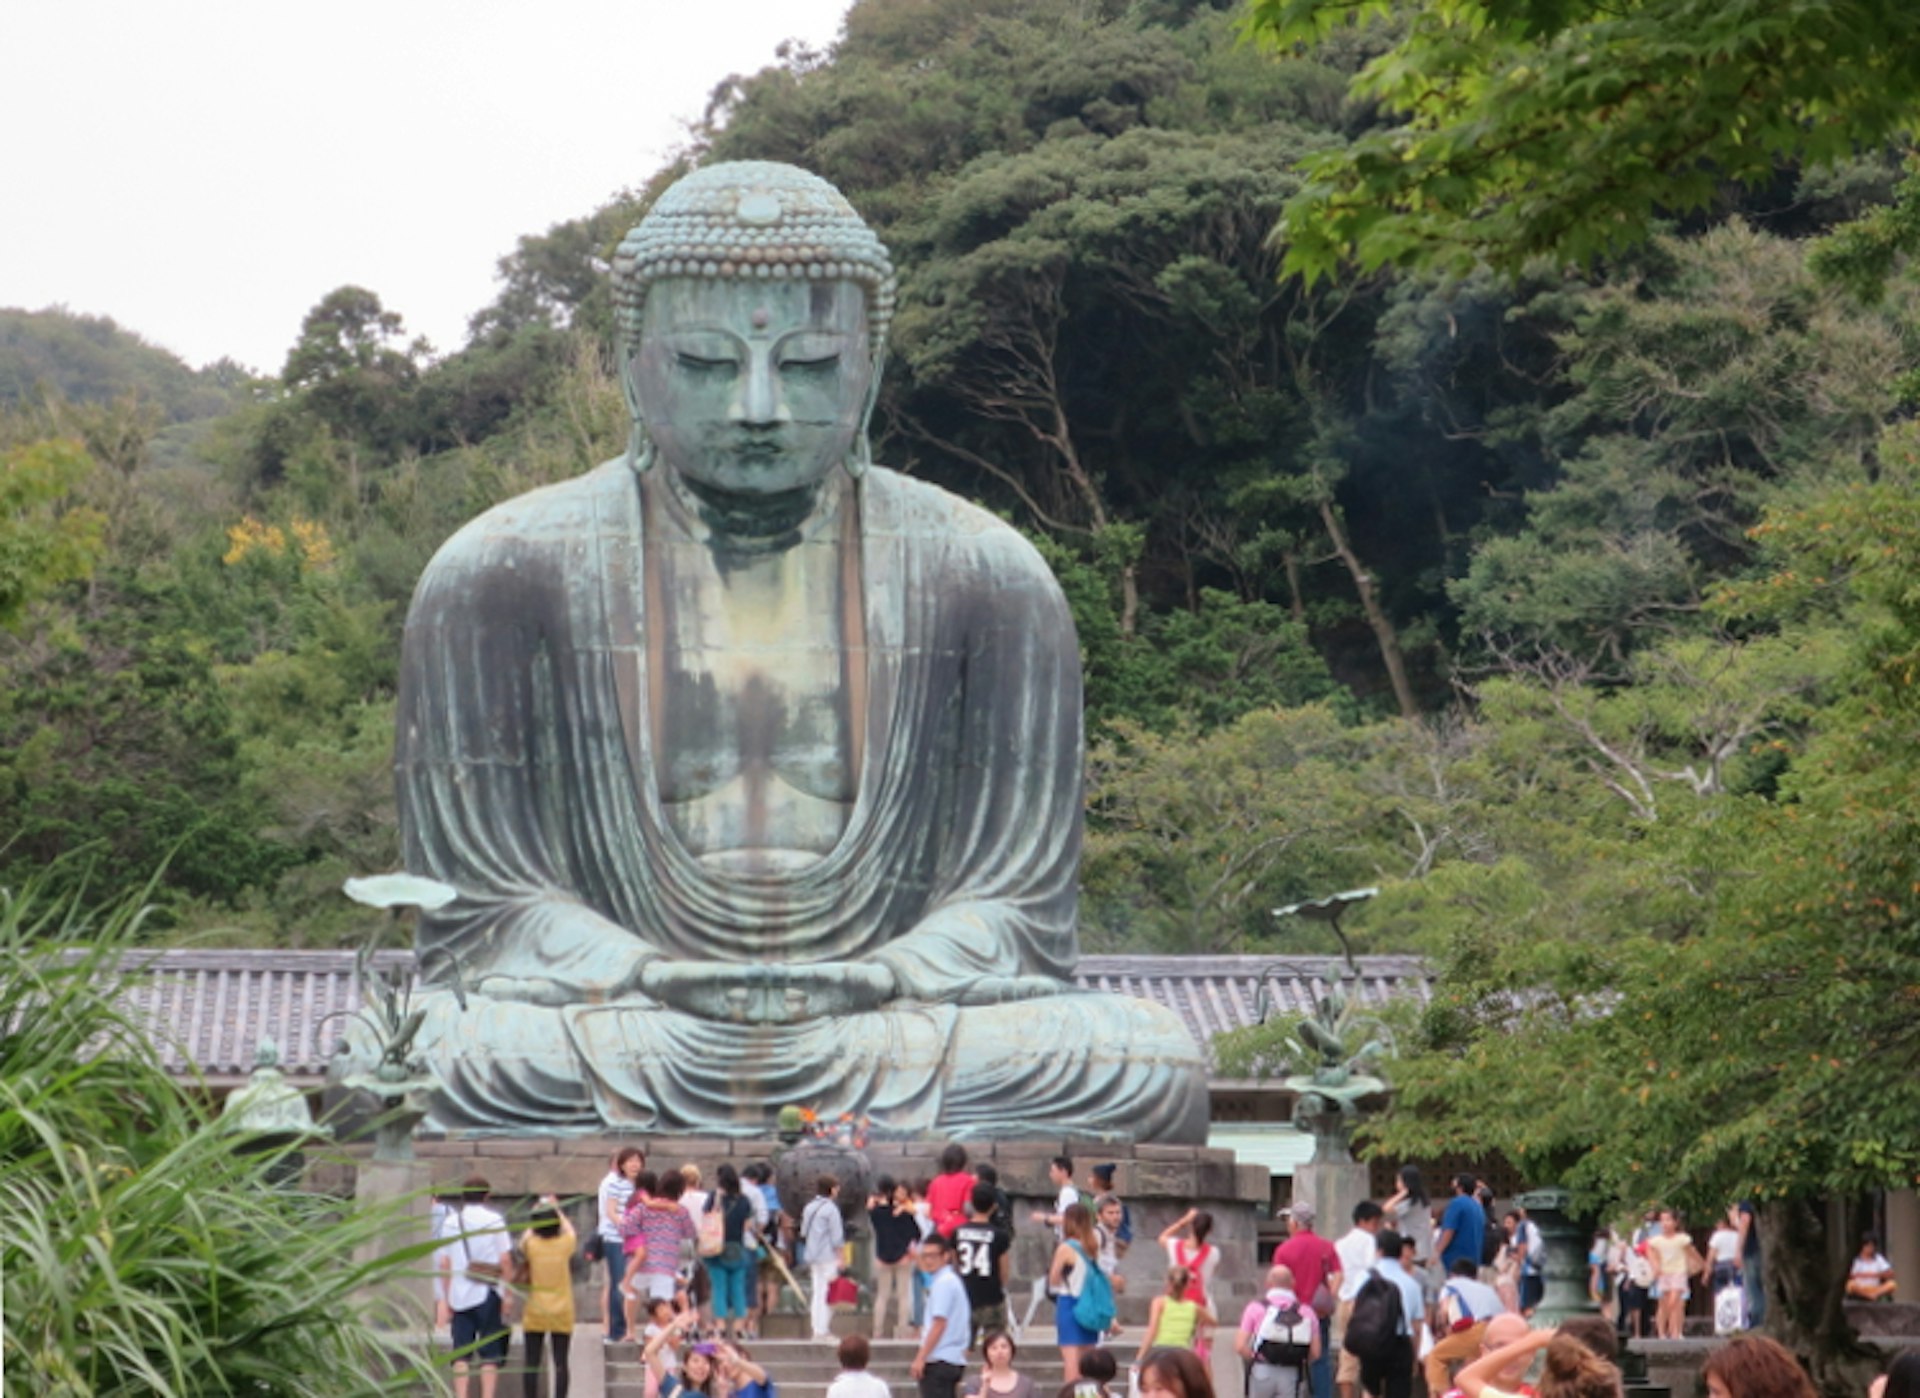 The bronze statue of Amida Buddha at Kōtoku-in temple, Kamakura. Image by Matt Phillips / Lonely Planet